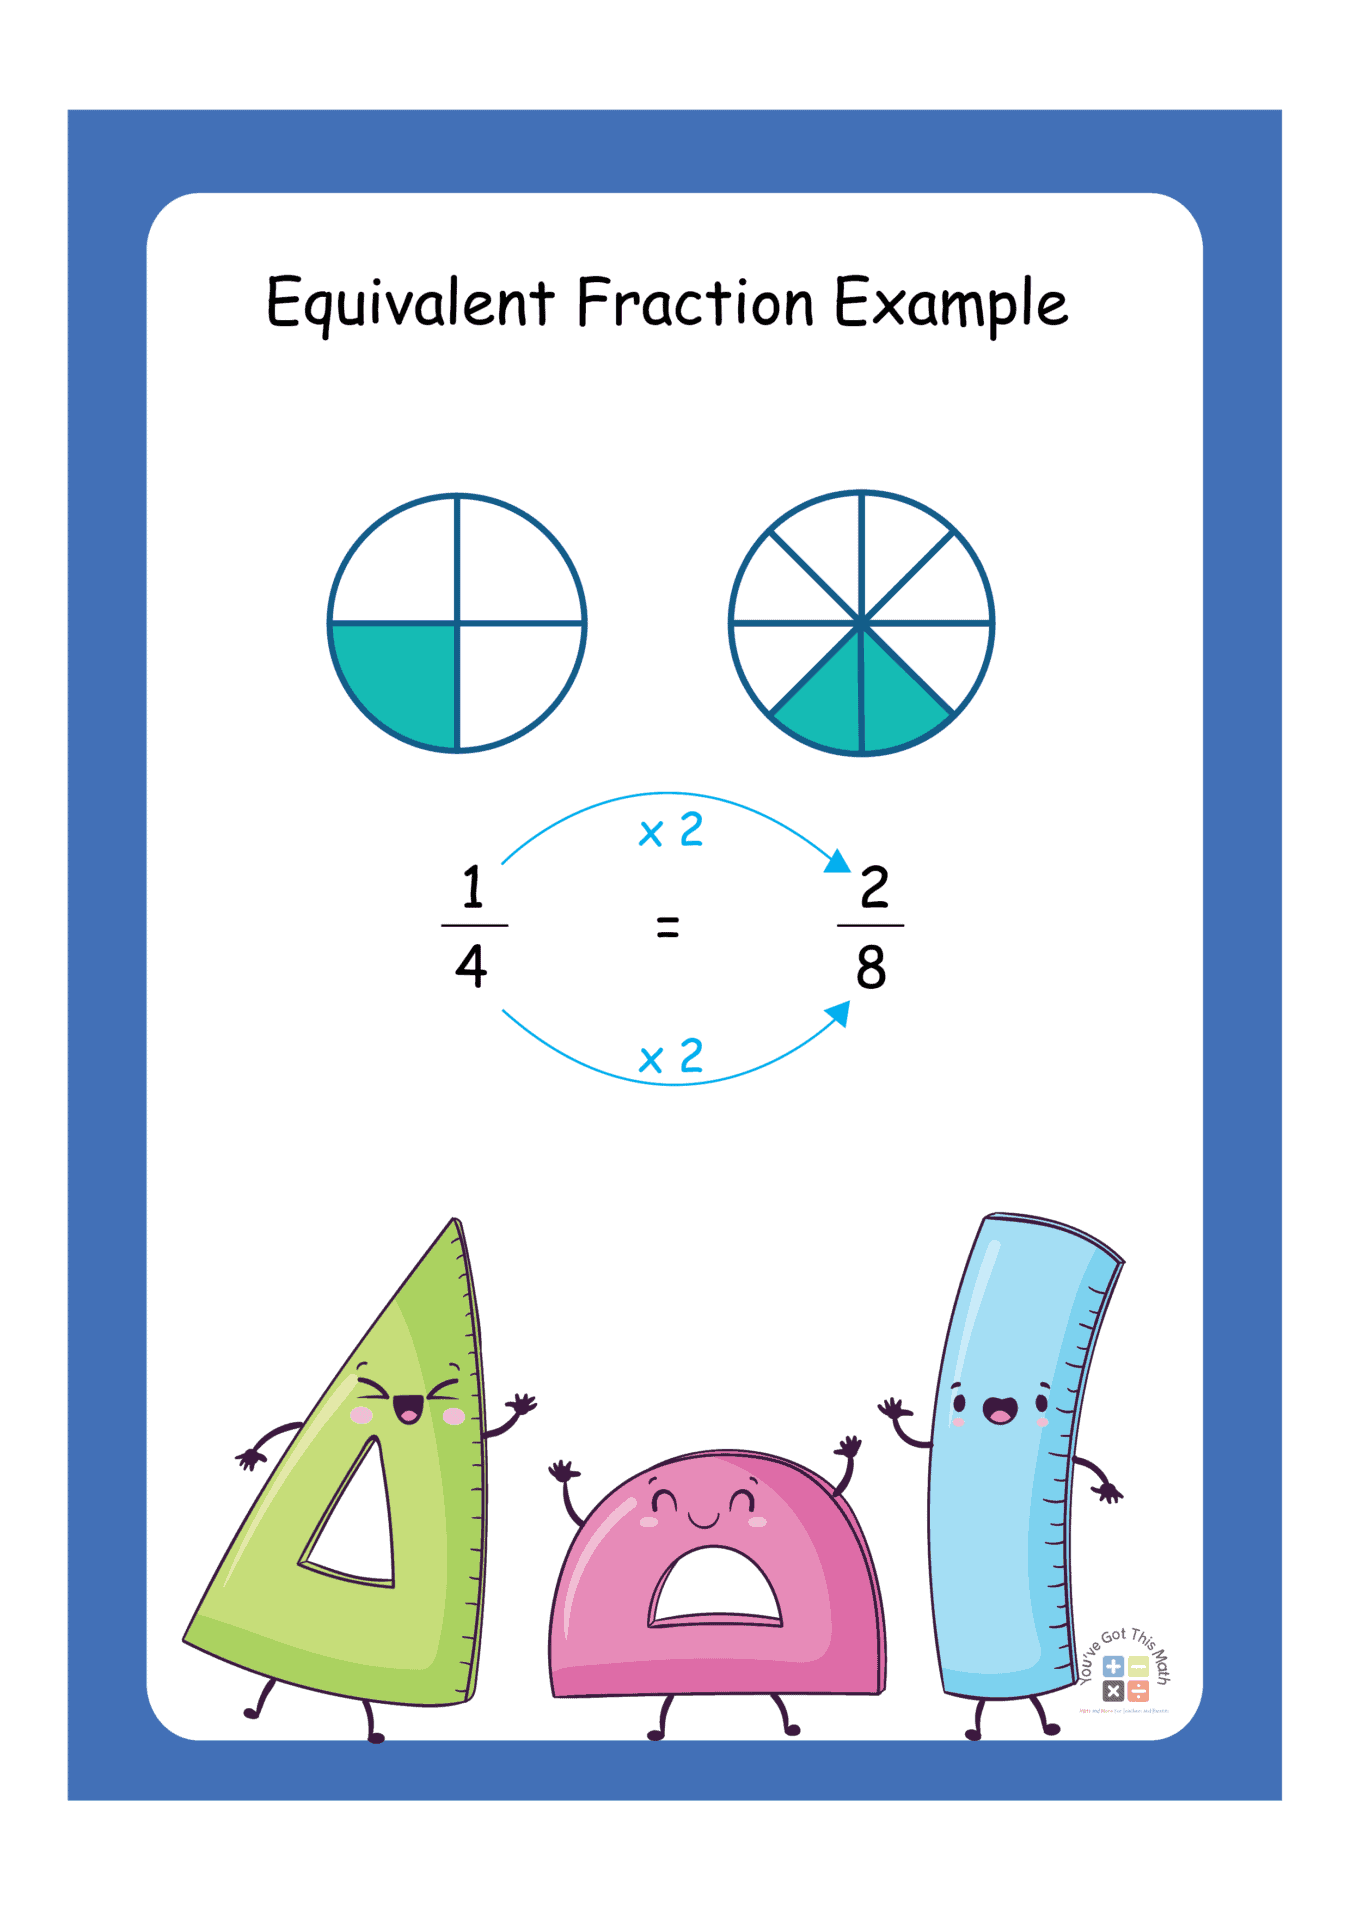 7-free-equivalent-fractions-on-a-number-line-worksheet